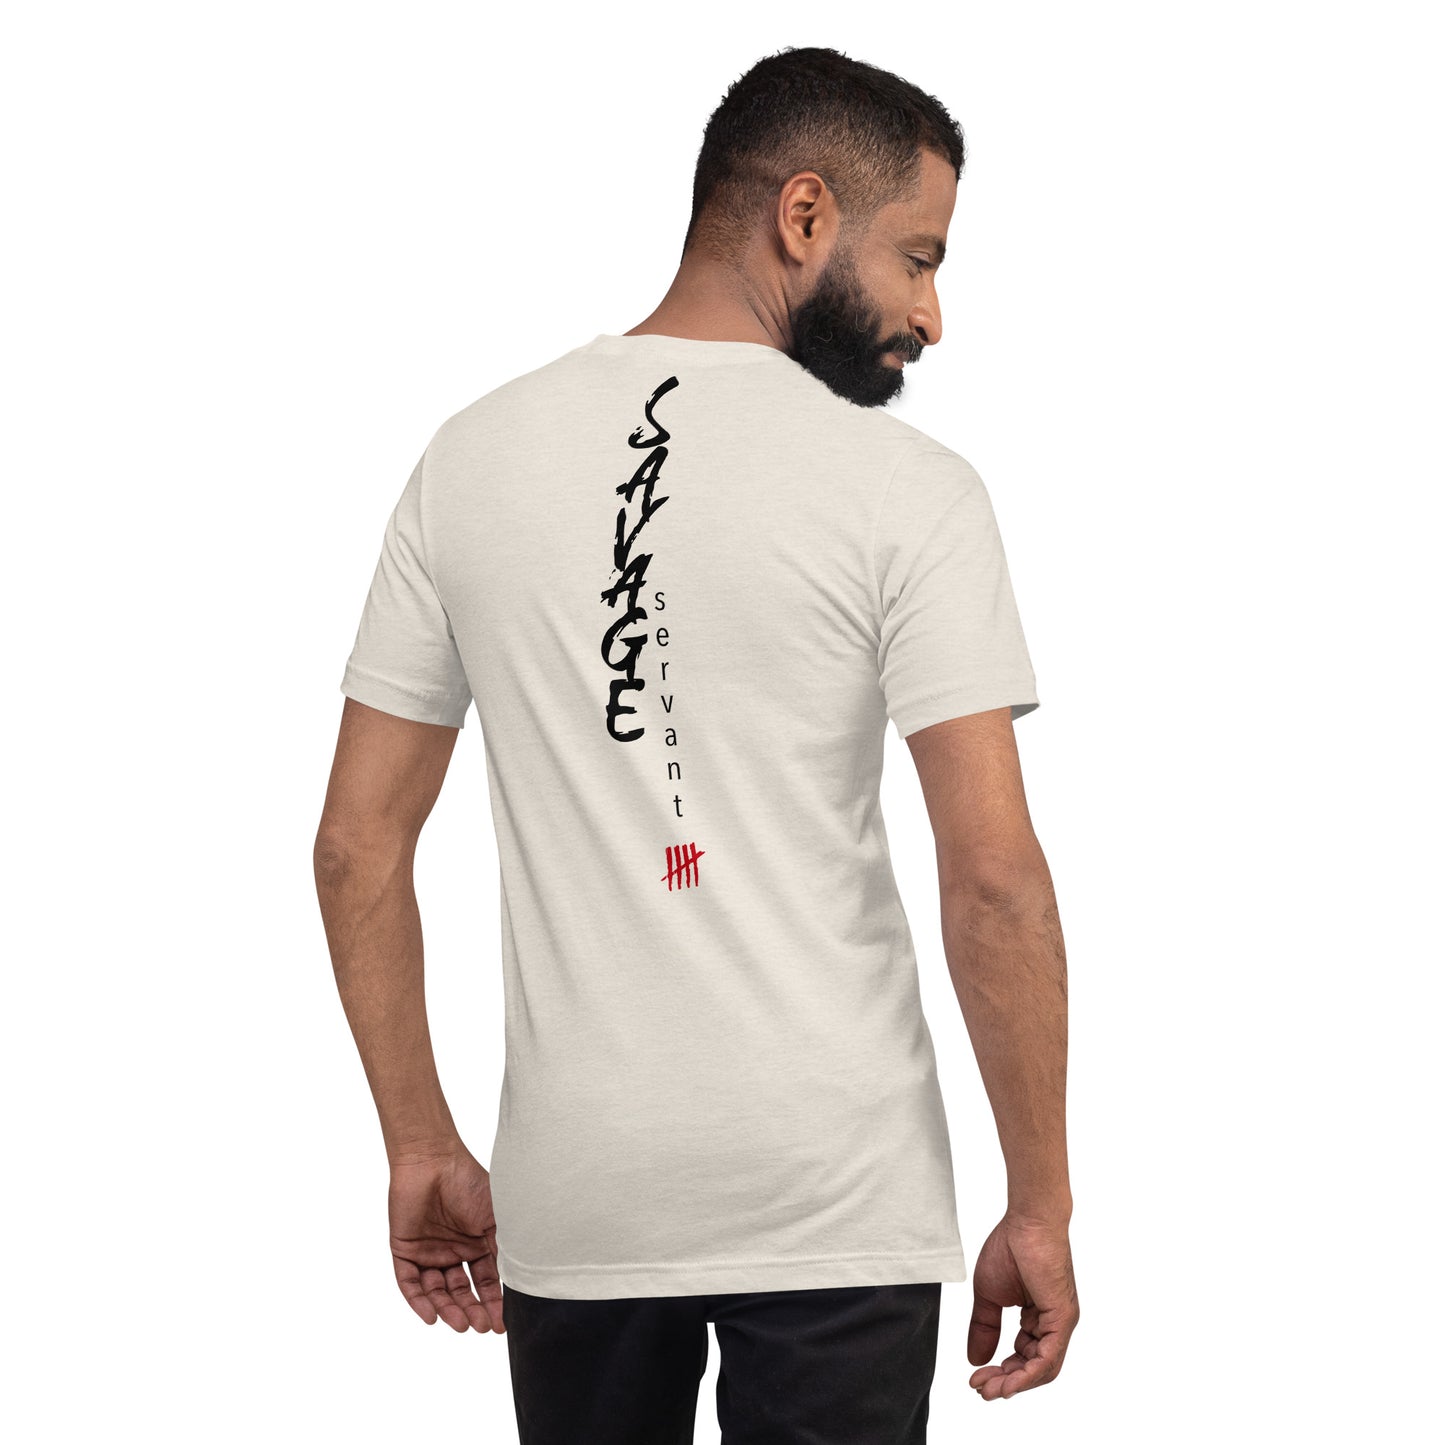 Savage Servant - Unisex t-shirt